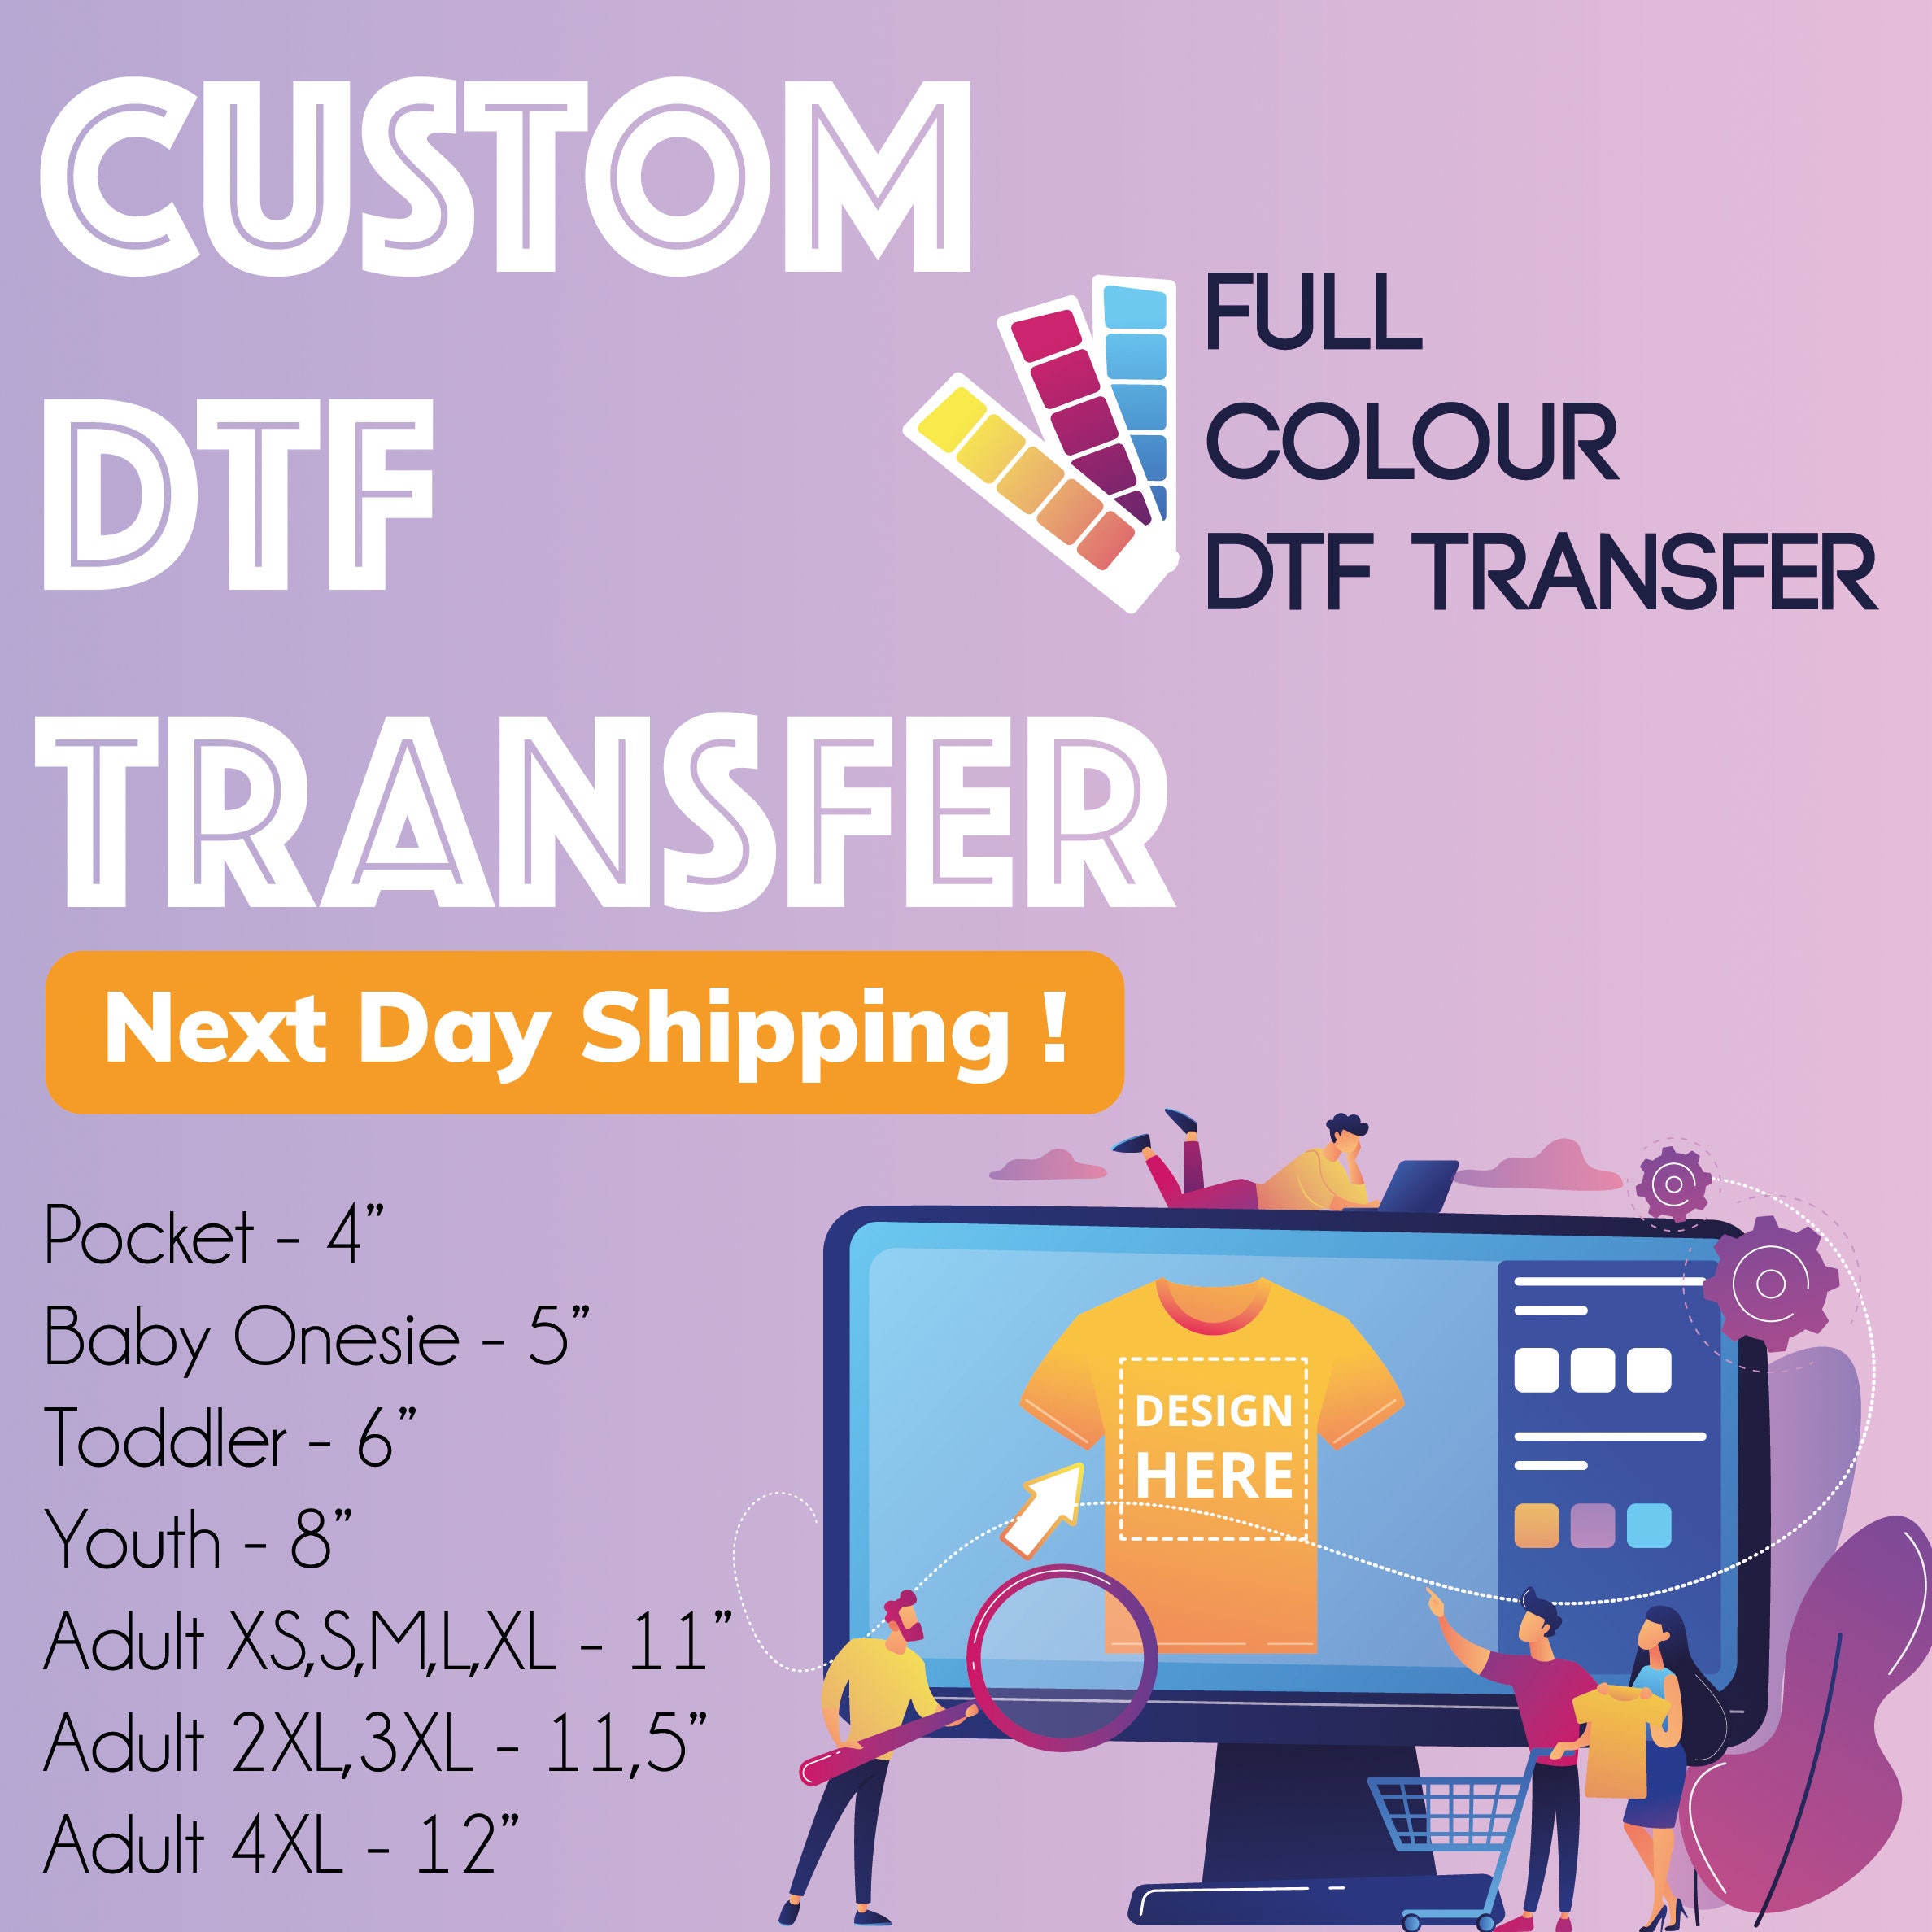 DTF Transfers, Direct to Film, Custom DTF Transfer, Ready for Press Heat  Transfers, DTF Transfer Ready to Press, Custom Transfers, 3997 